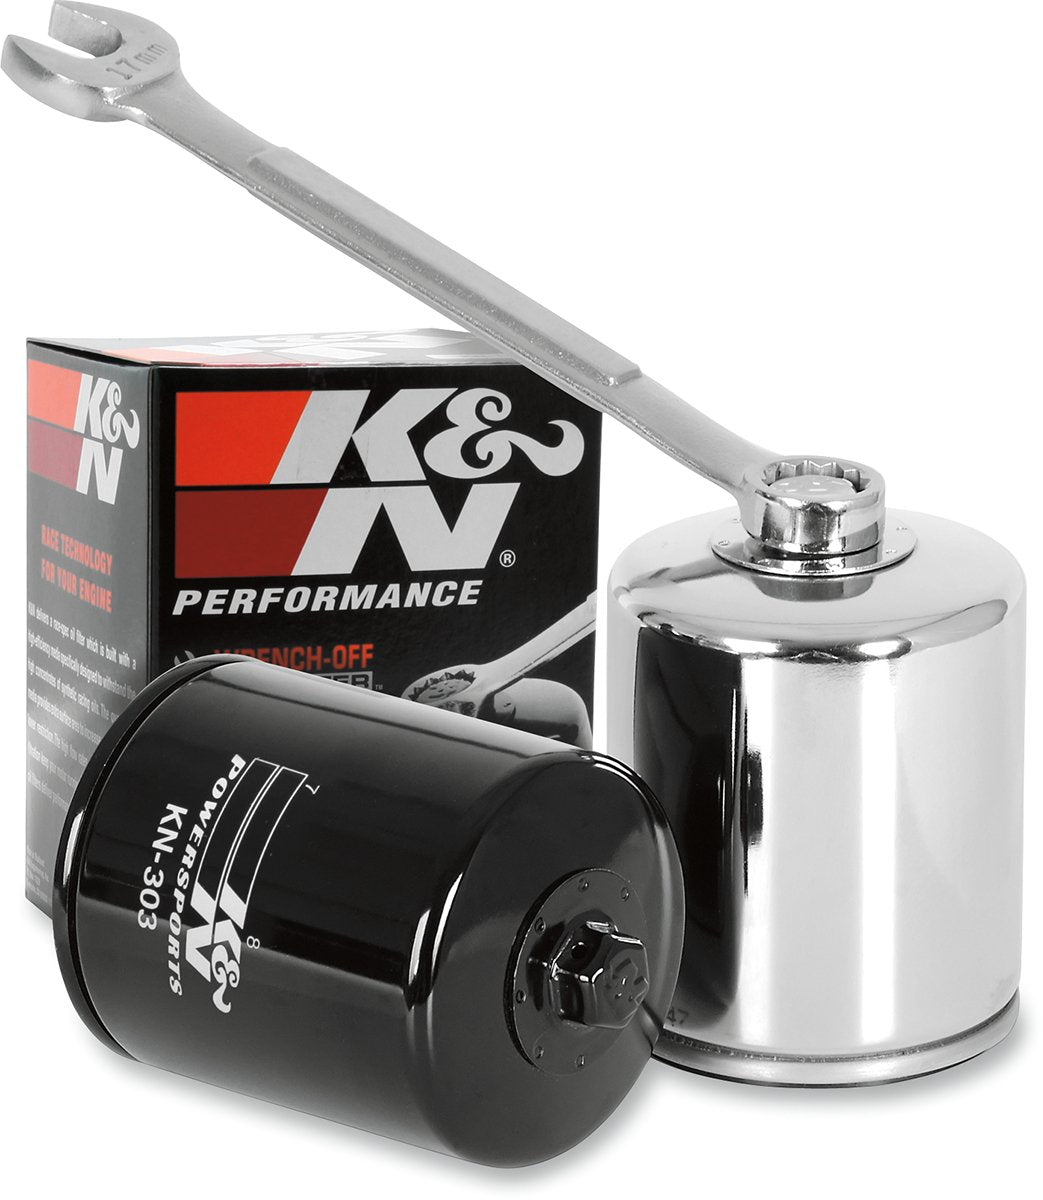 K&N High Performance "Wrench Off" Jet Ski Oil Filter Kawasaki Yamaha - KN-303 JT-1500 STX VX1100 FX1100 - Performance Jet Ski (PJS) UK